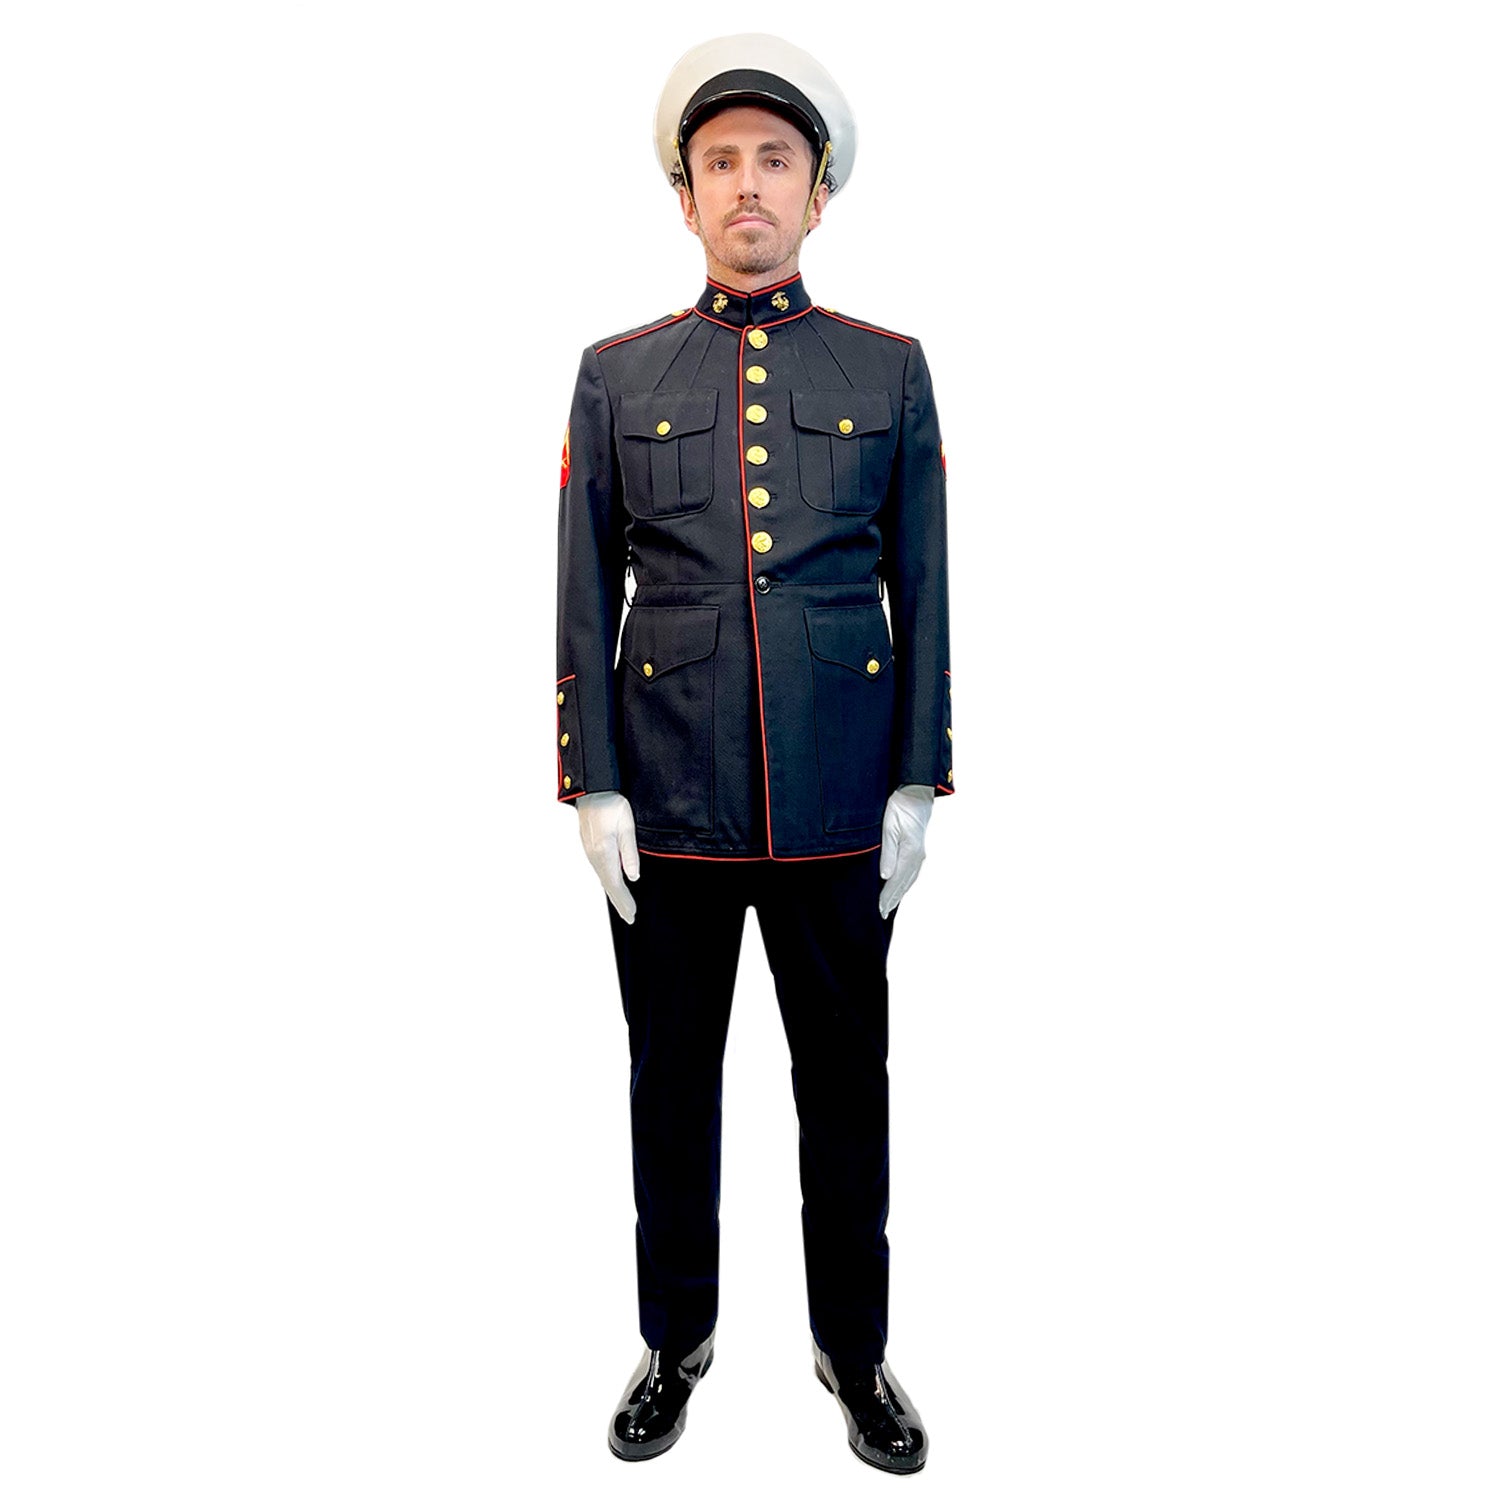 Marine Dress Blues Uniform Adult Costume